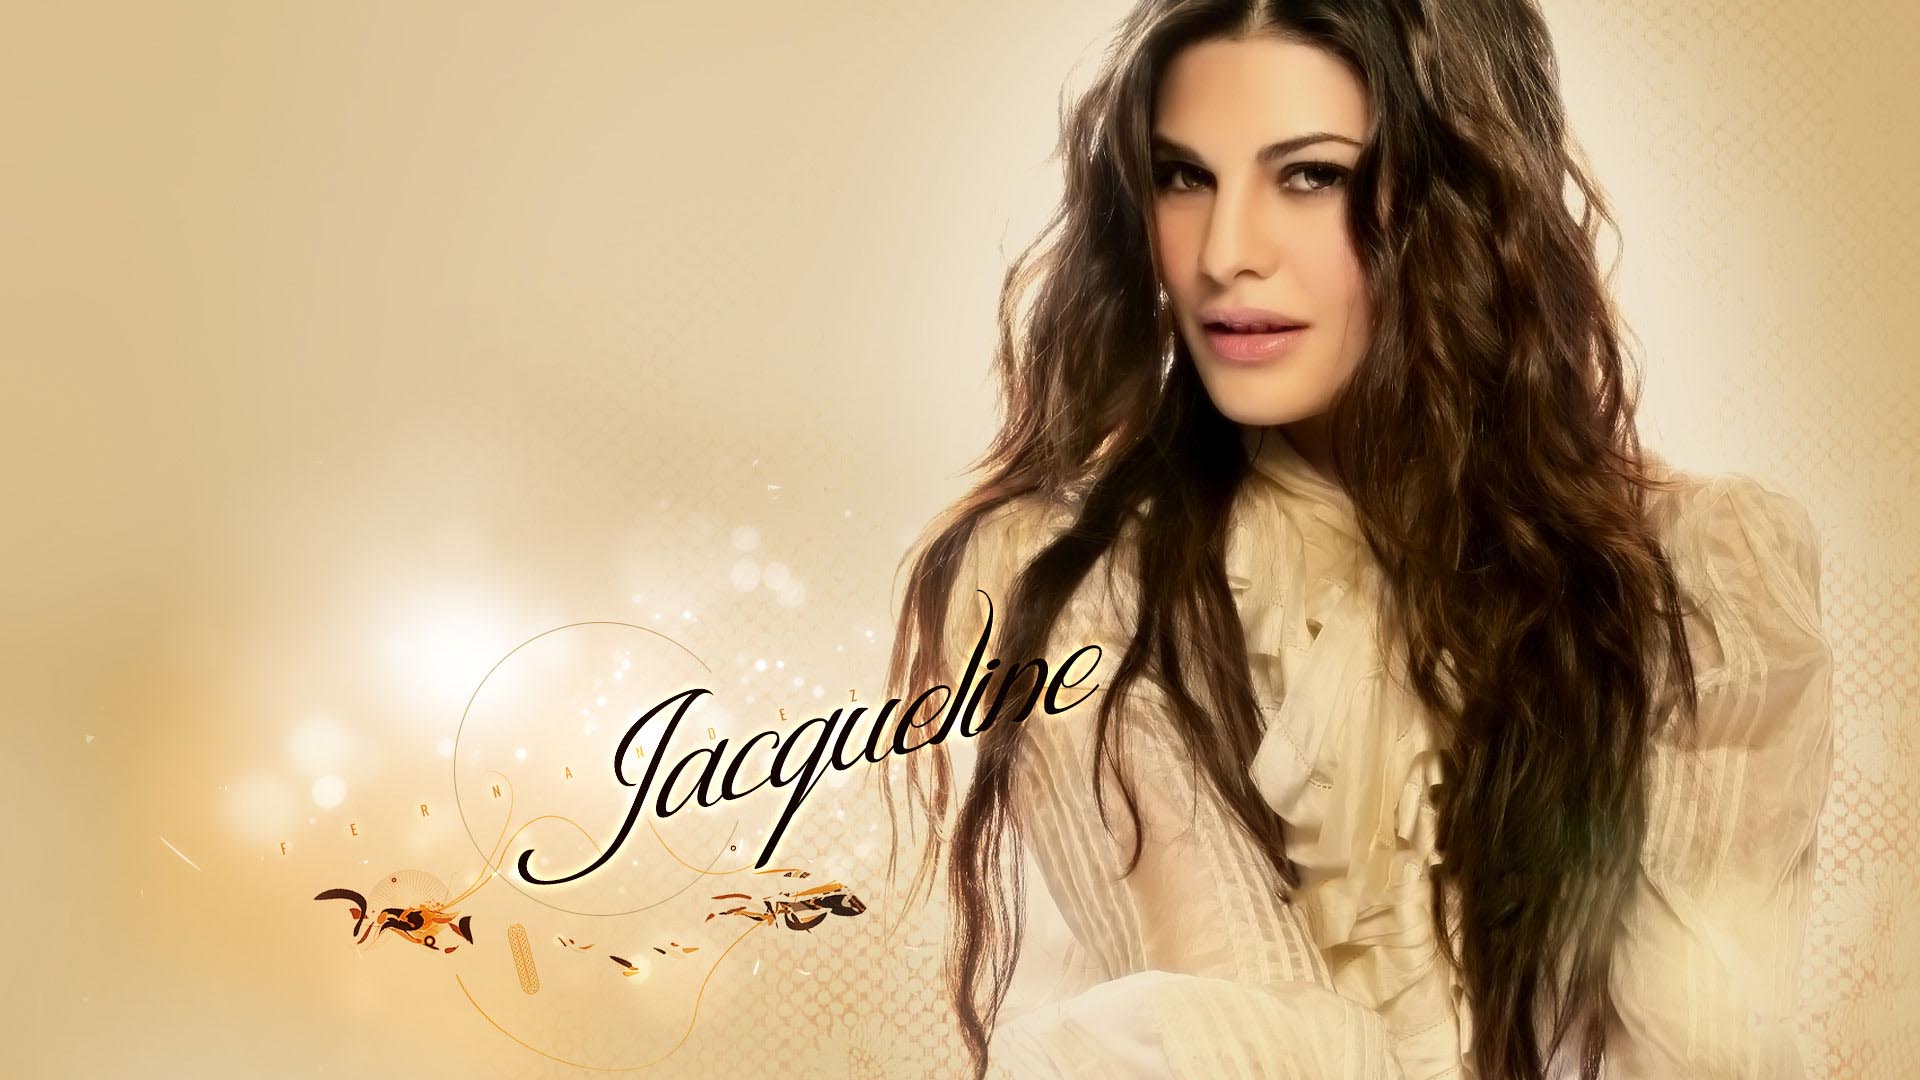 jacqueline fernandez hot smile with blue top hot images Jacqueline Fernandez ultra hd images